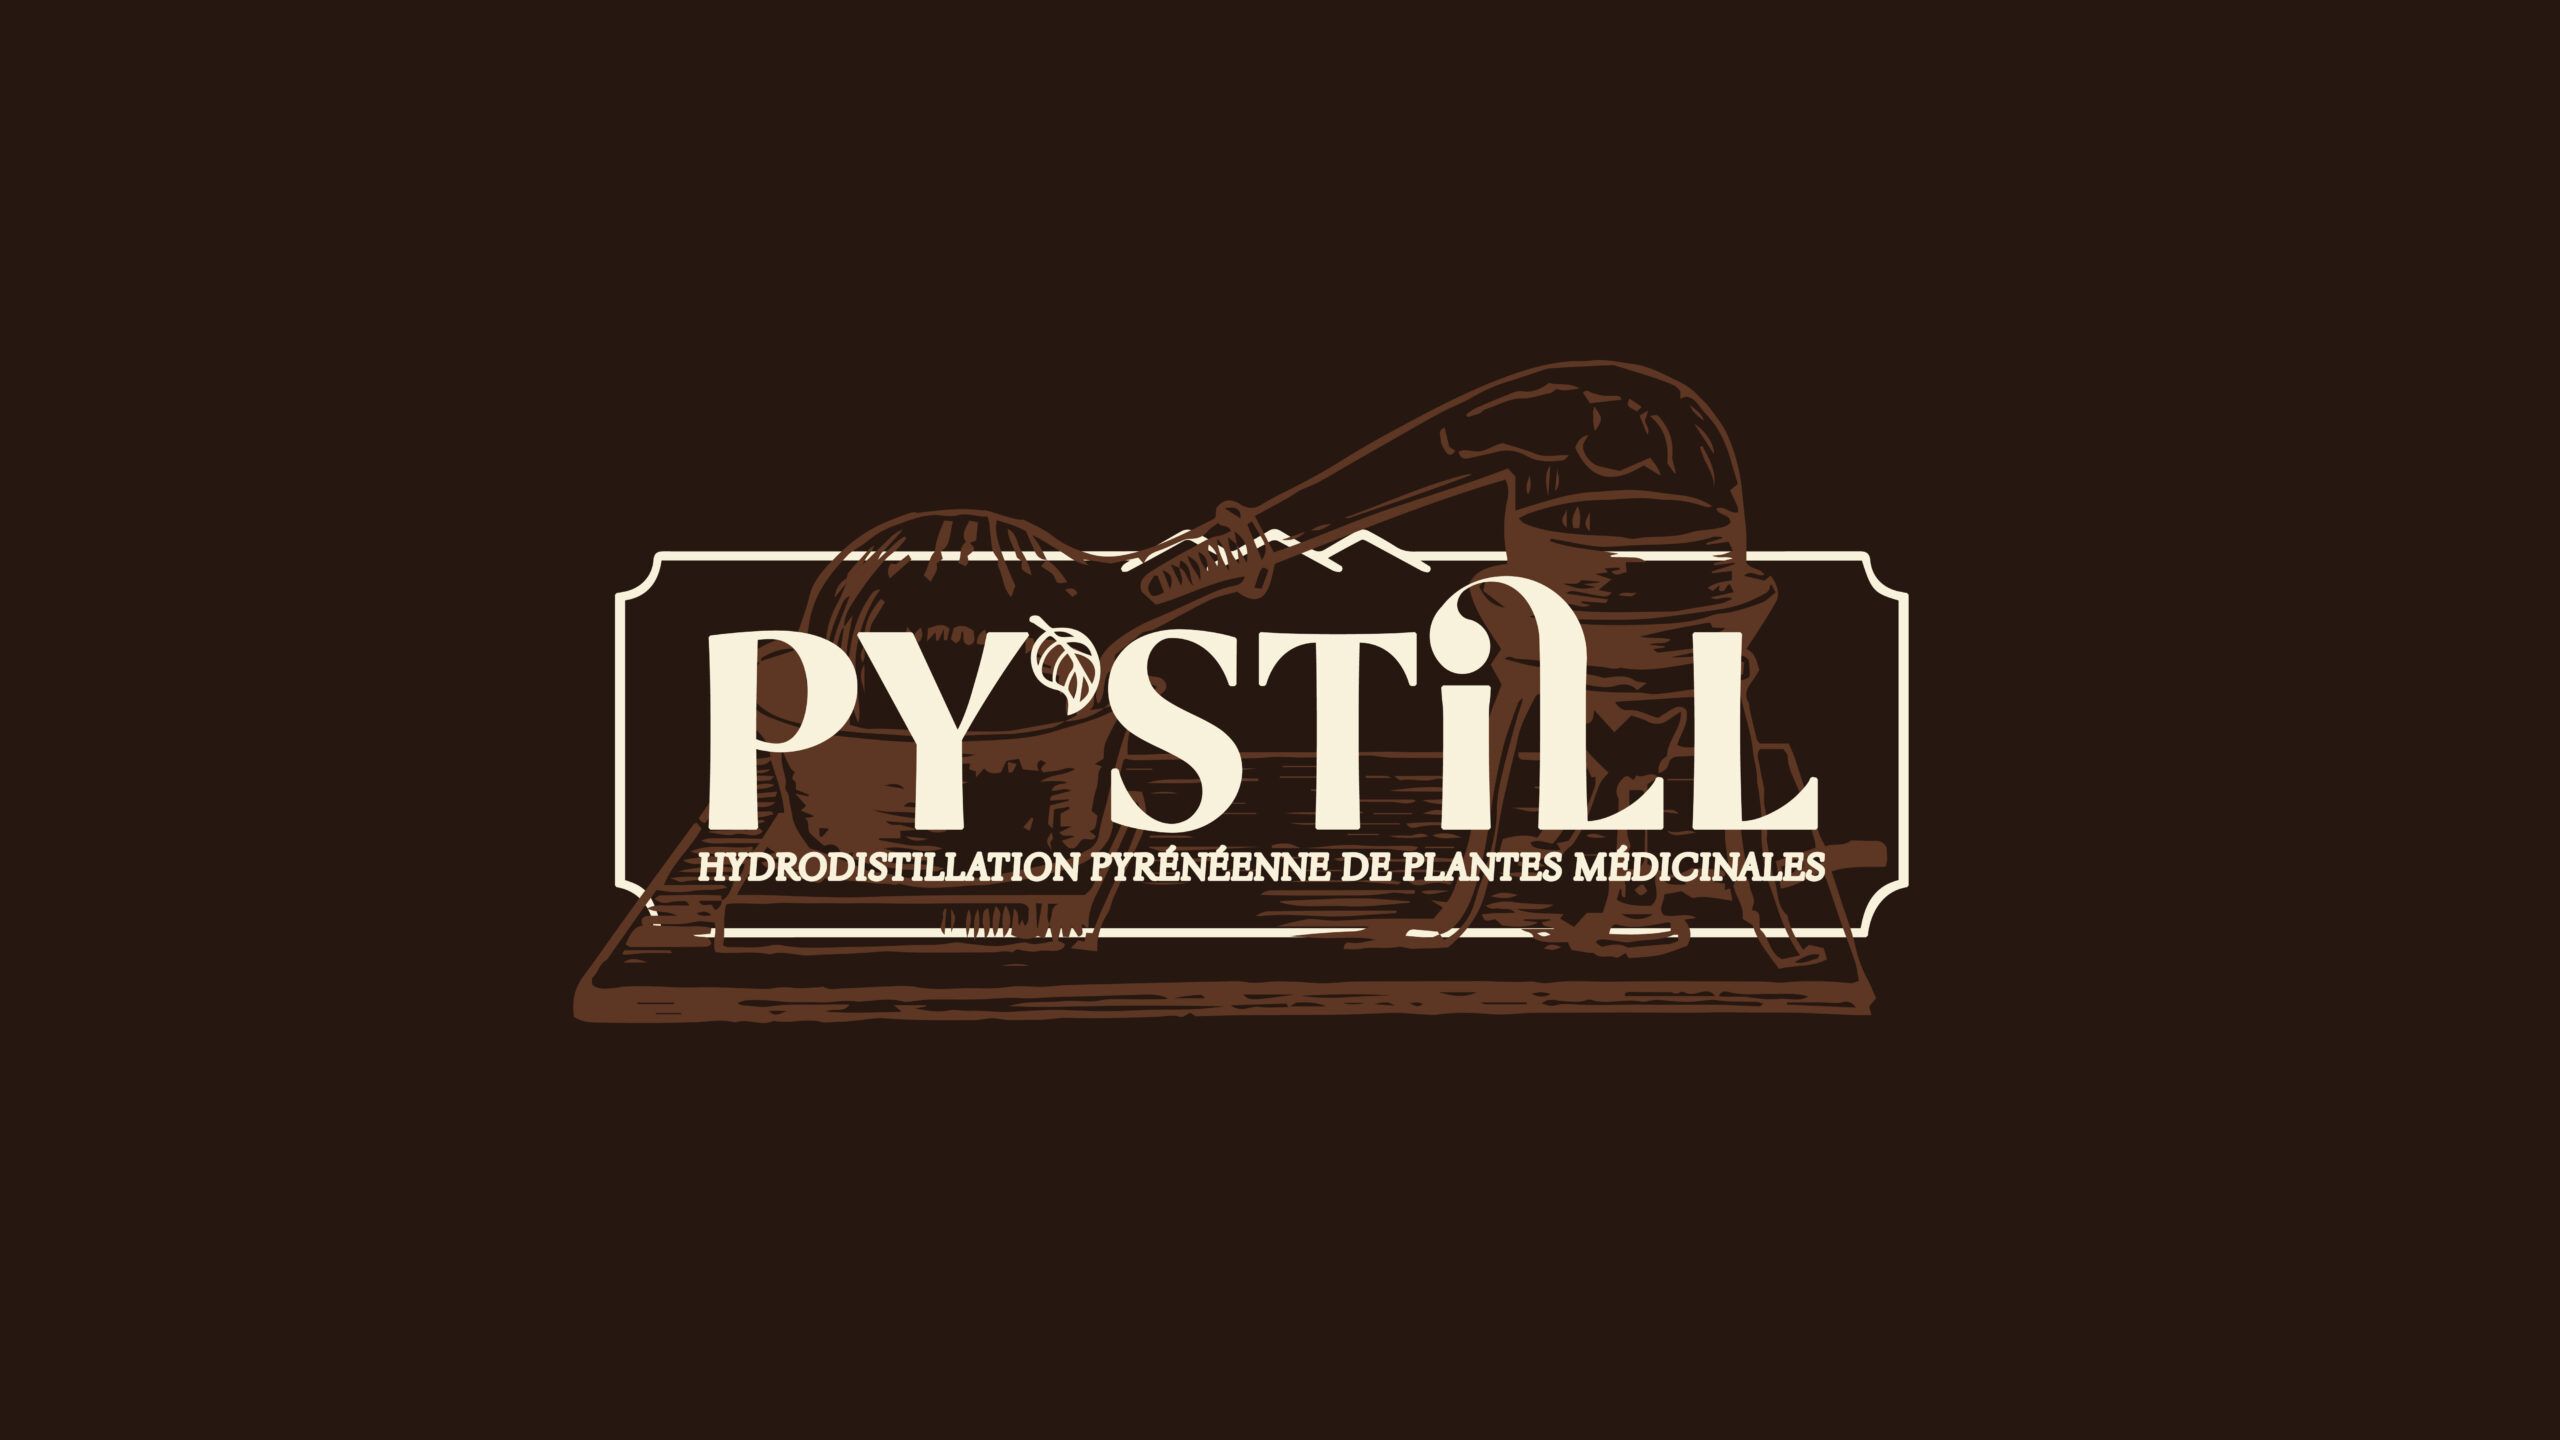 PY'STILL logo alambic